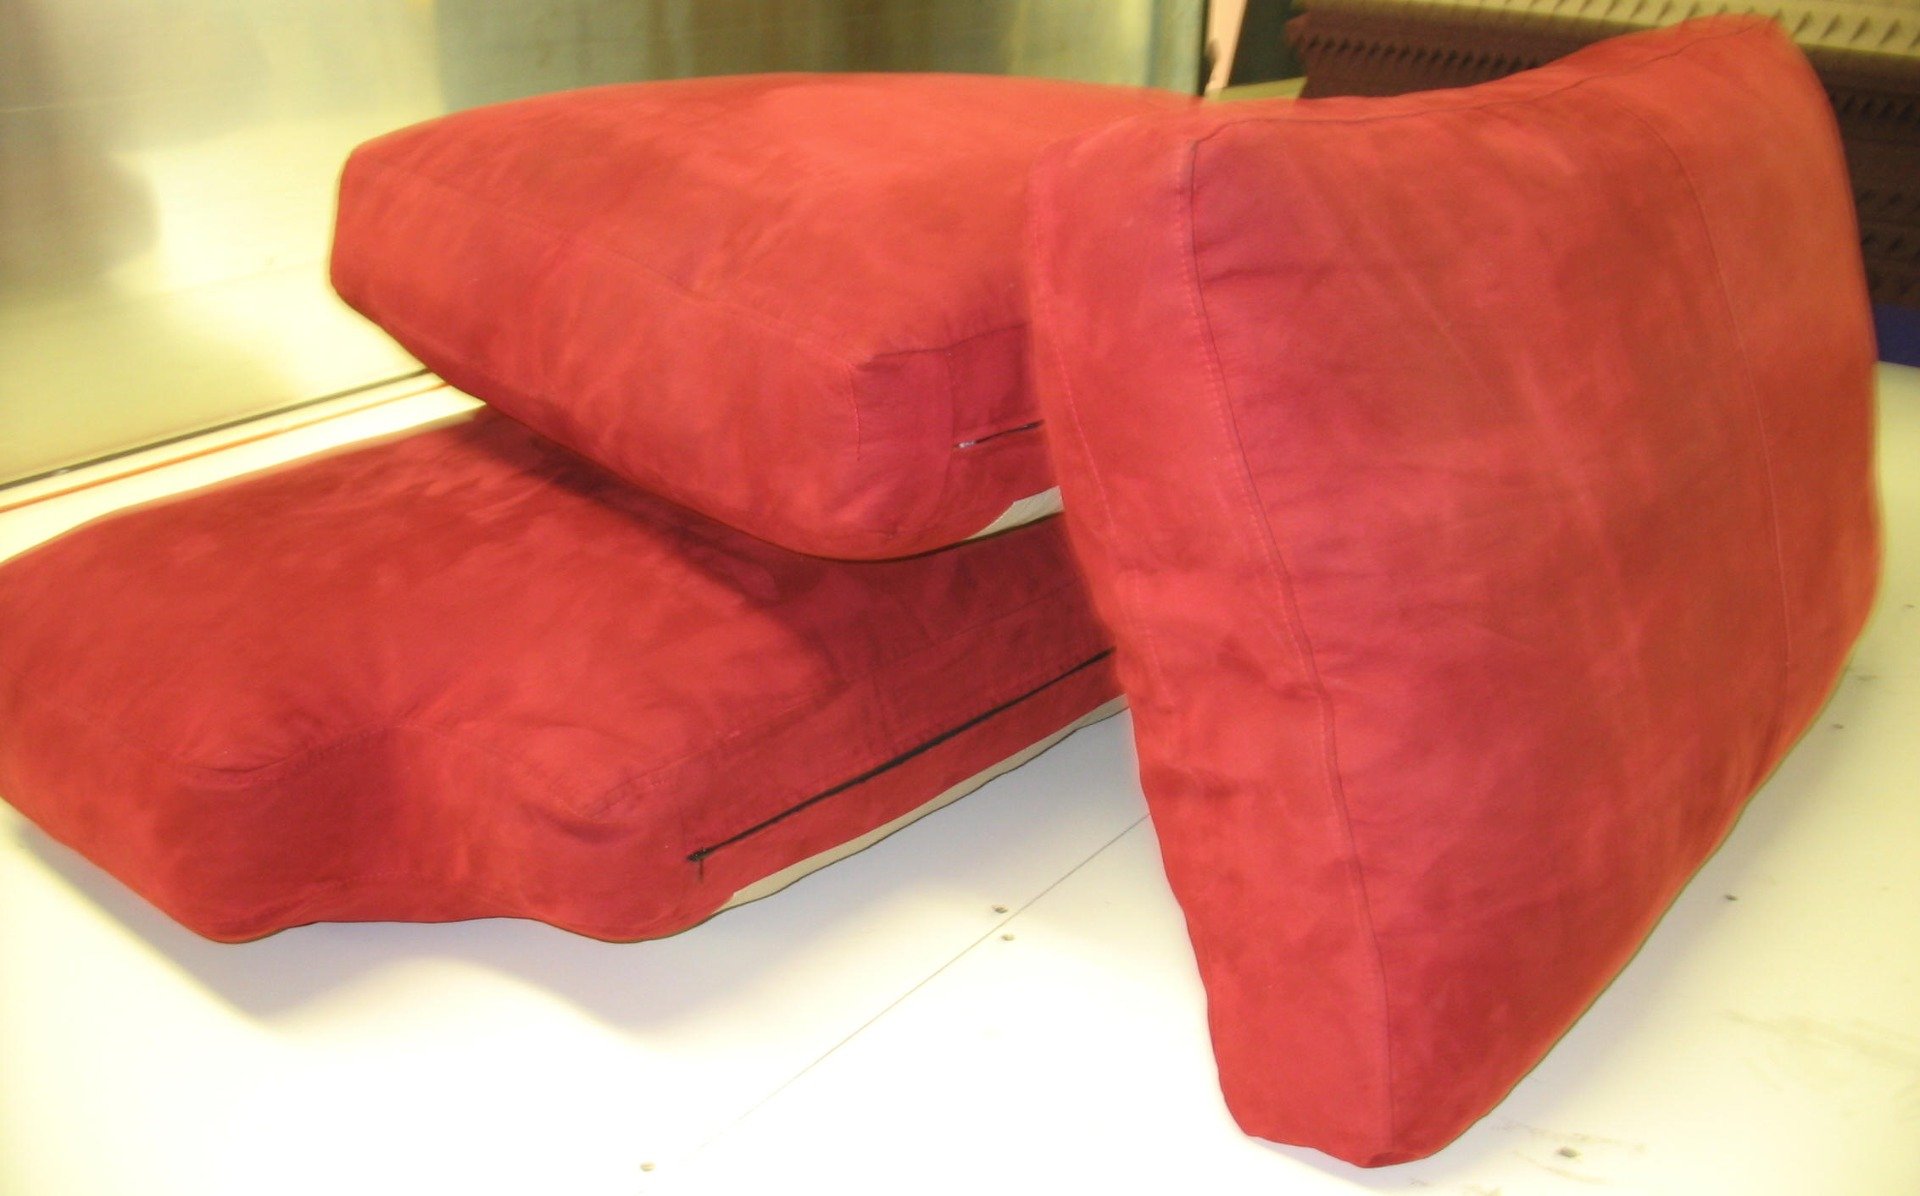 Sofa Backs Replacement  Foam n More & Upholstery